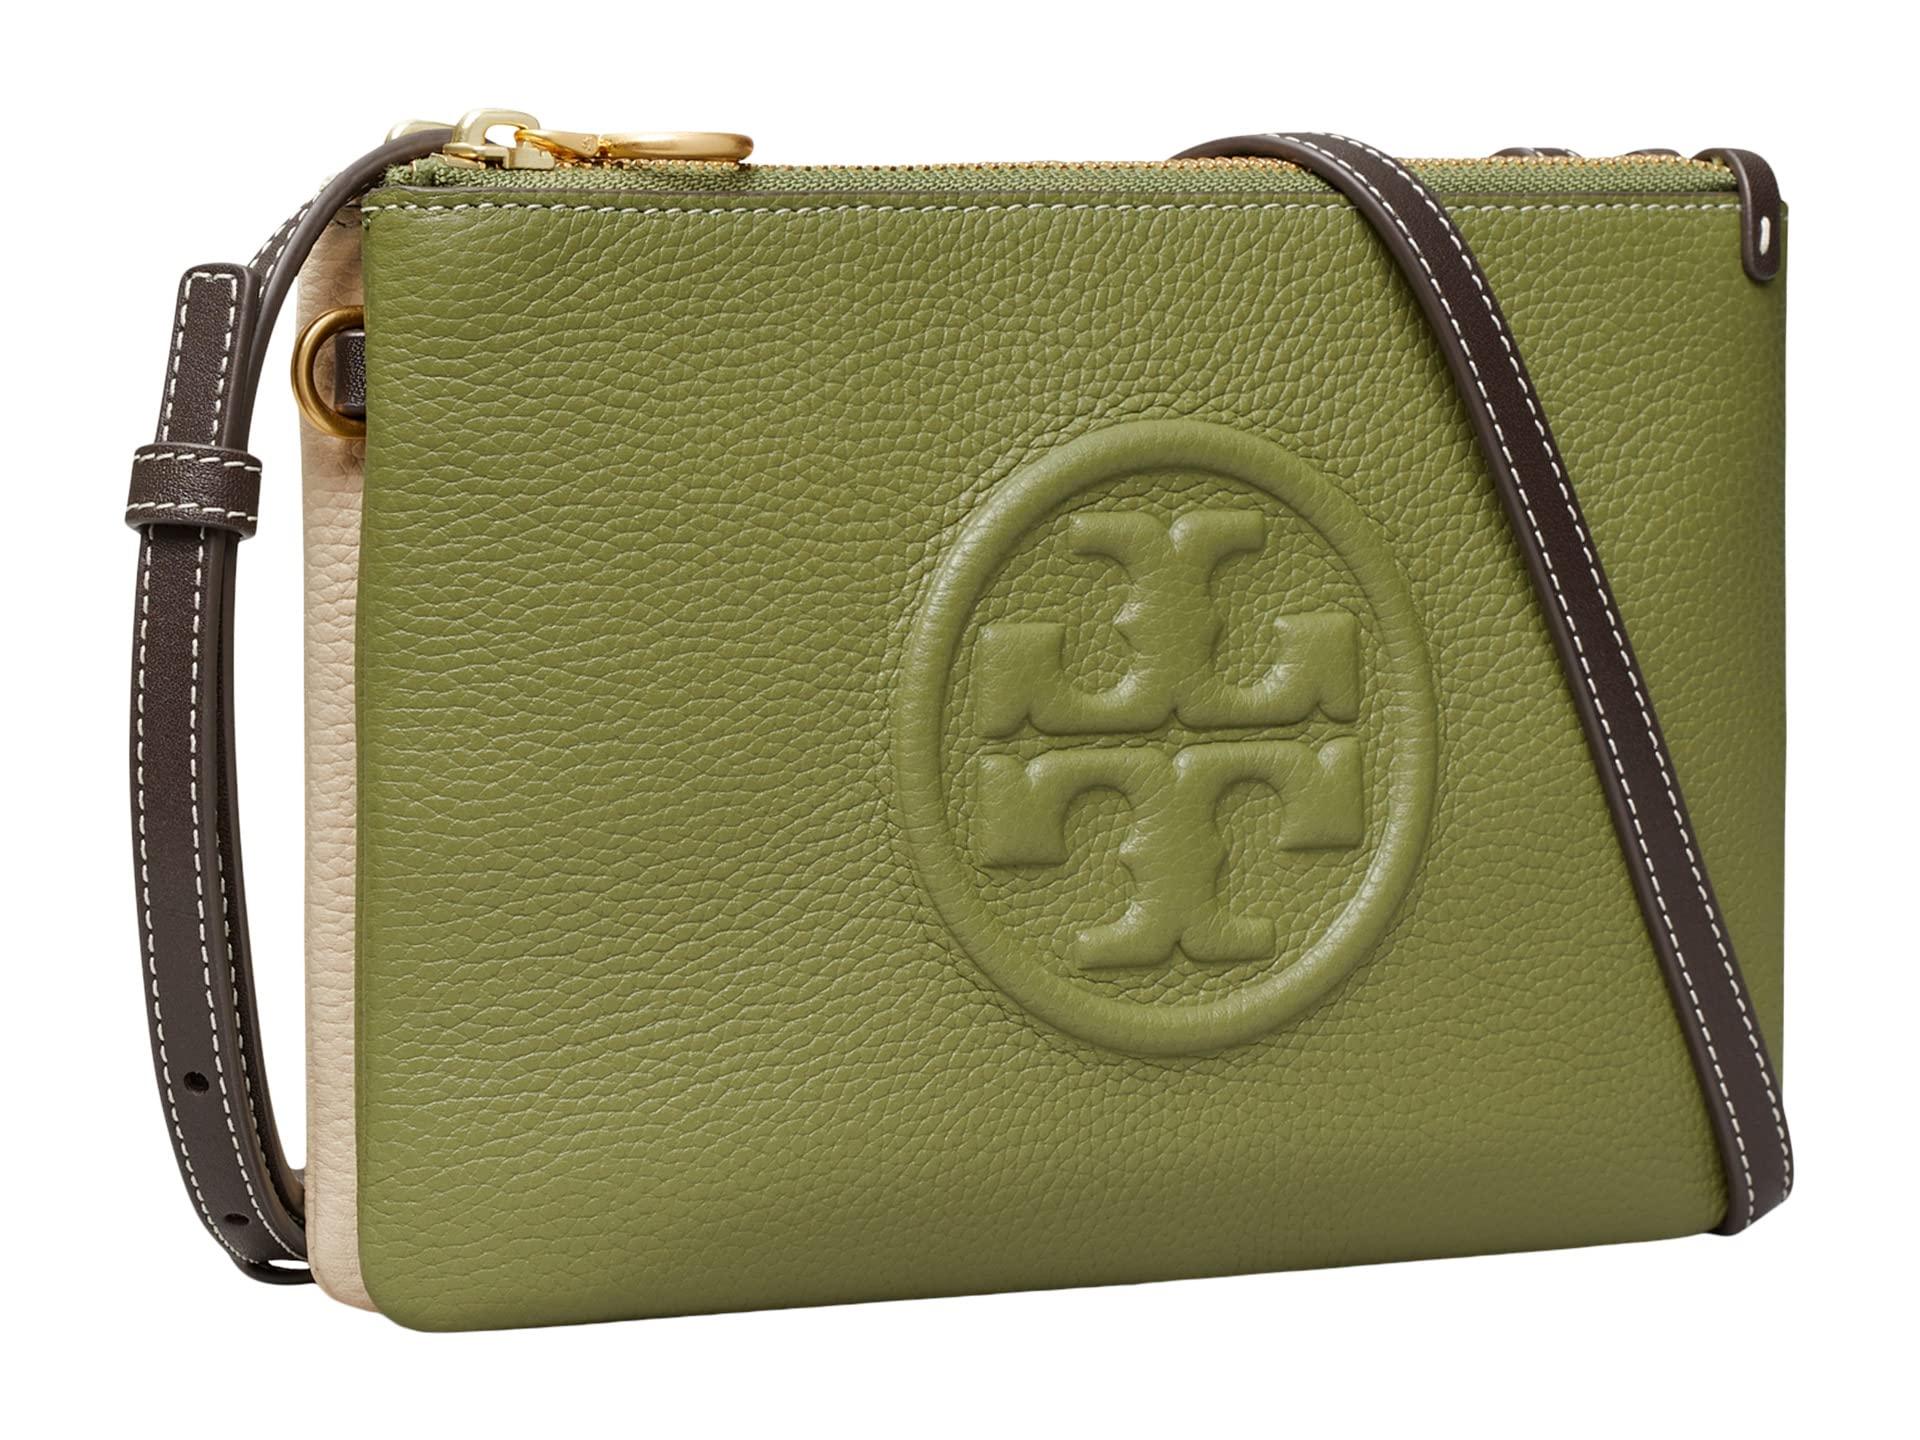 Tory Burch T Monogram Leather Double-zip Mini Bag in Green